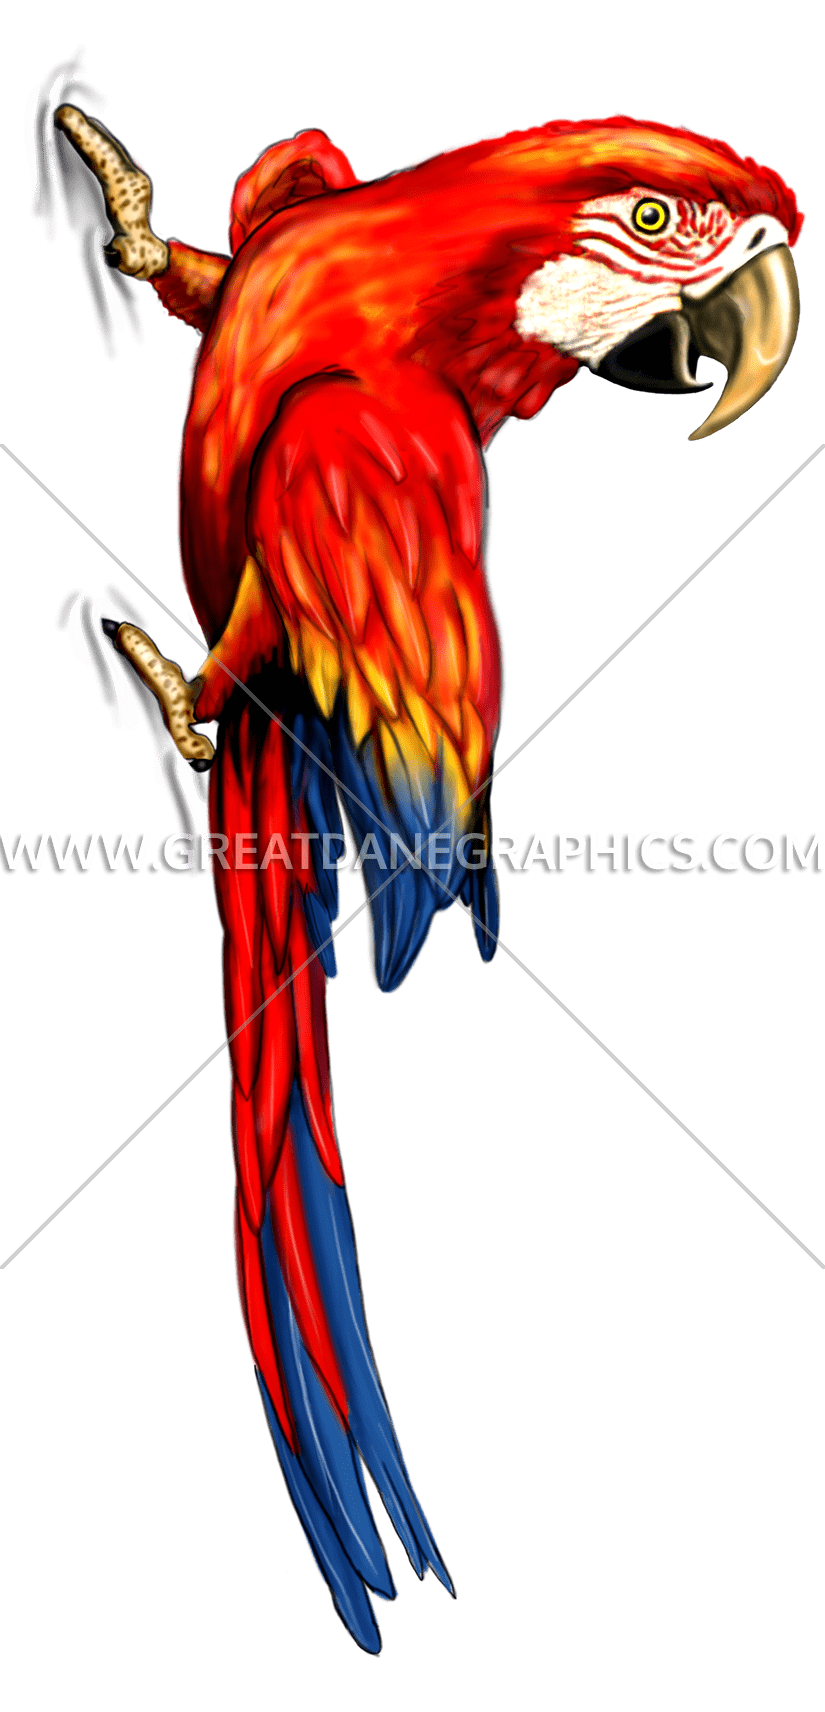 parrot clipart stock photo